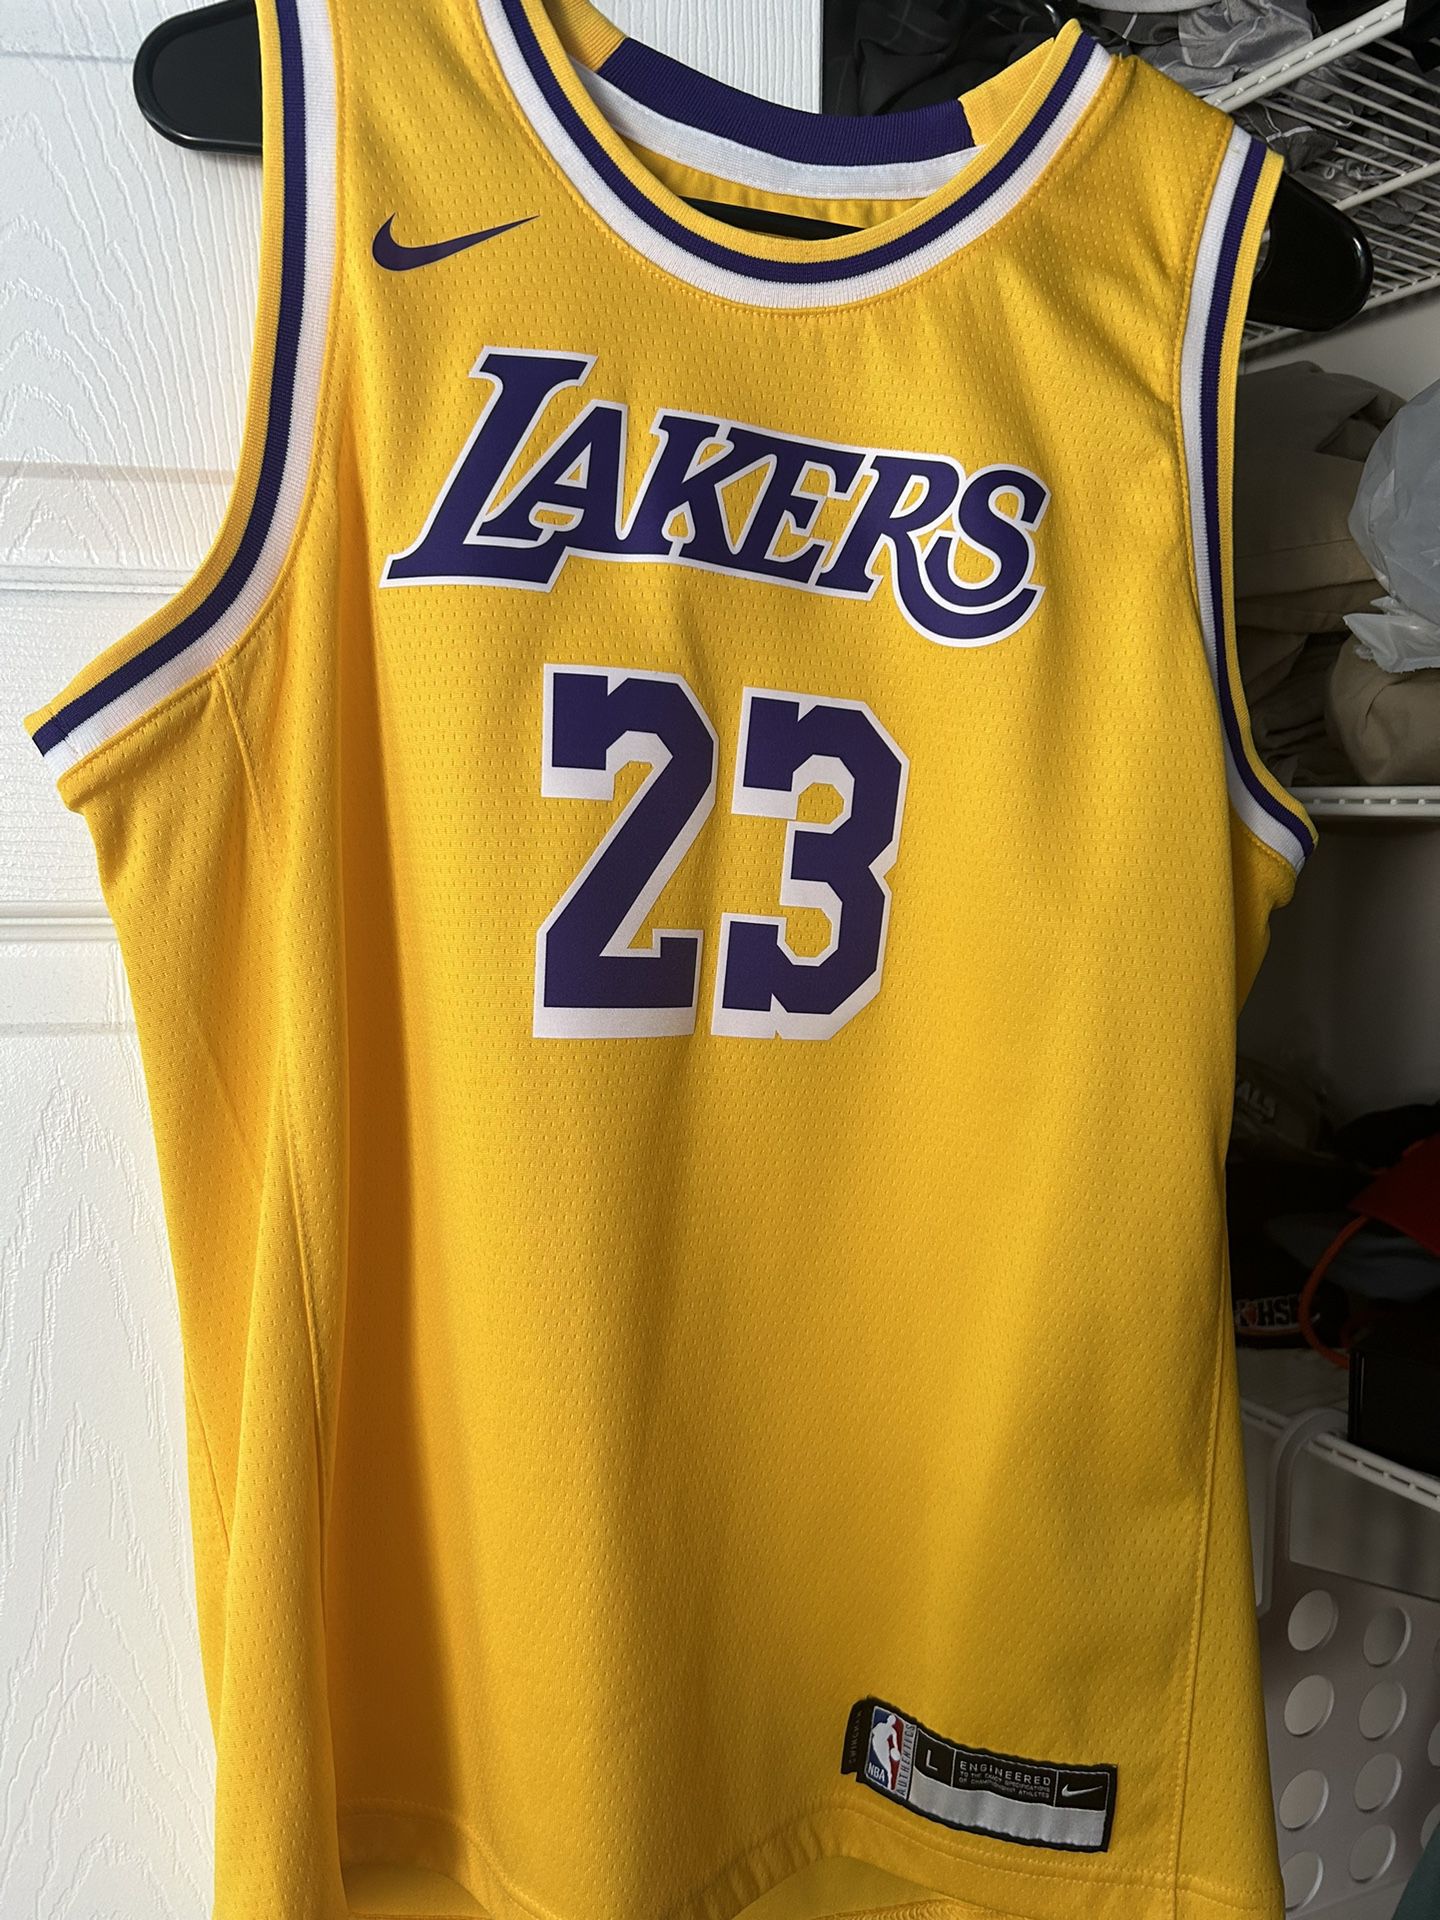 Lebron James Lakers Jersey Size LG